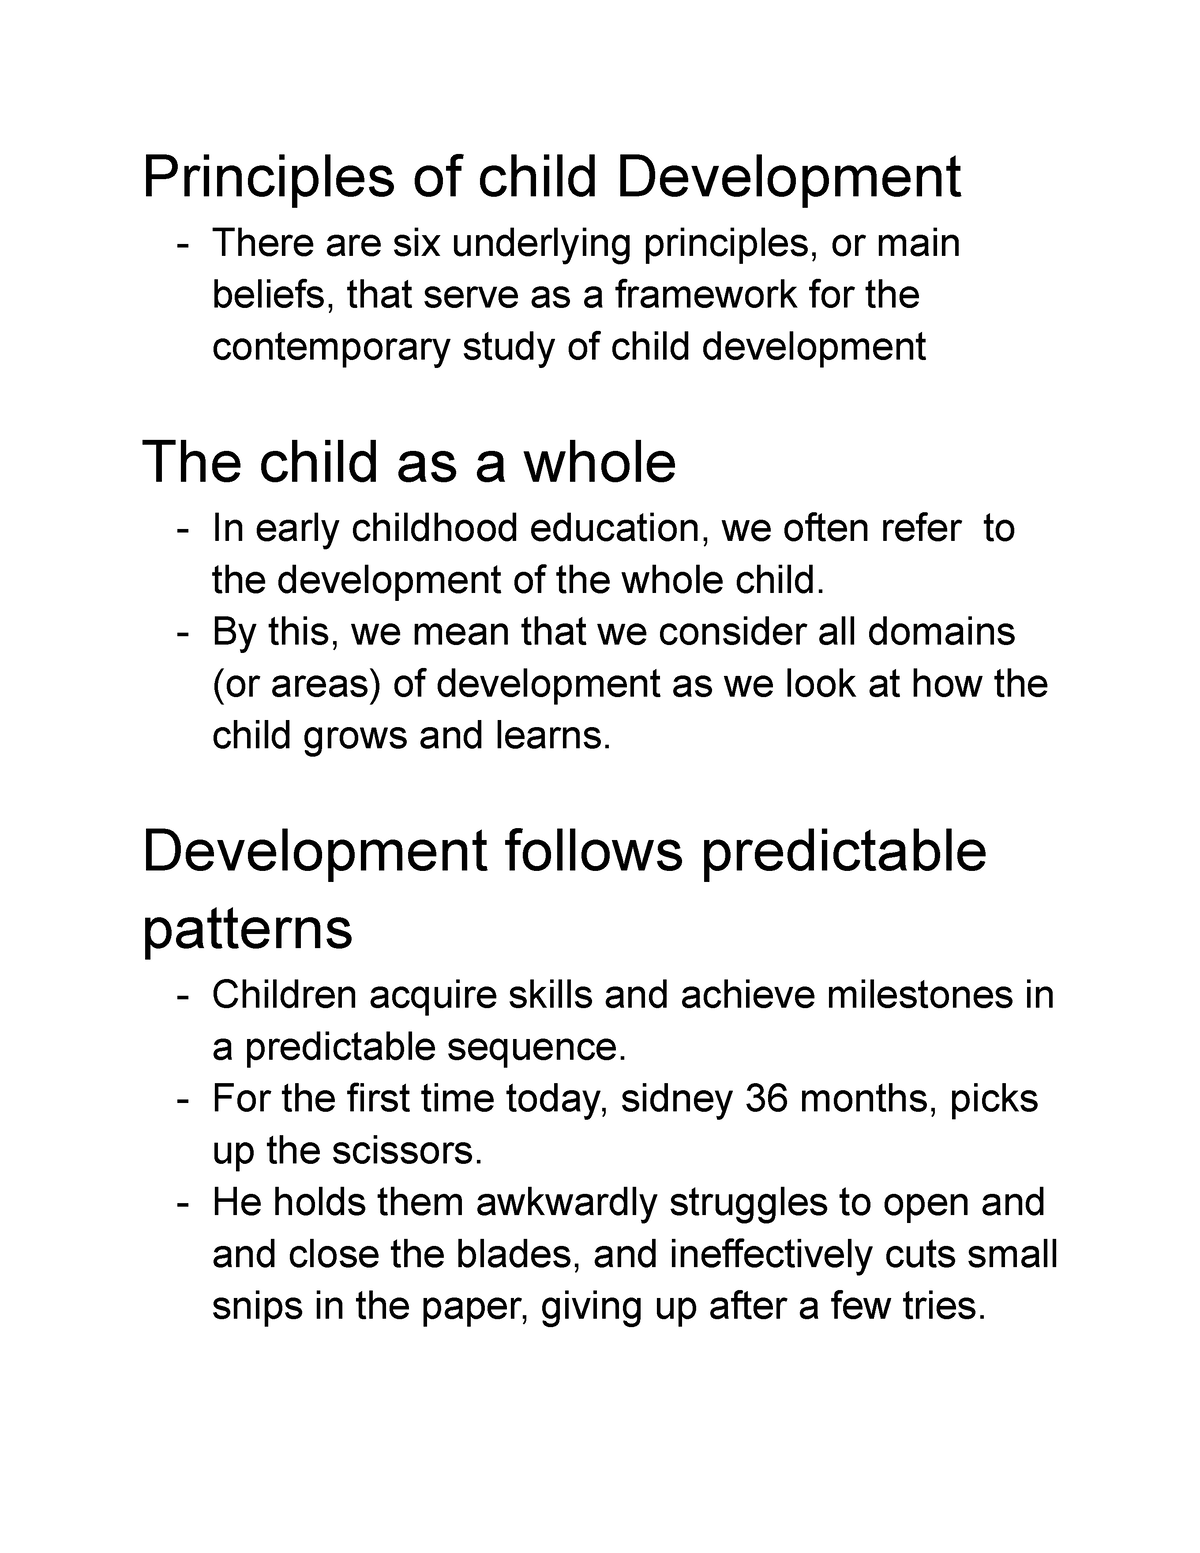 assignment about child development